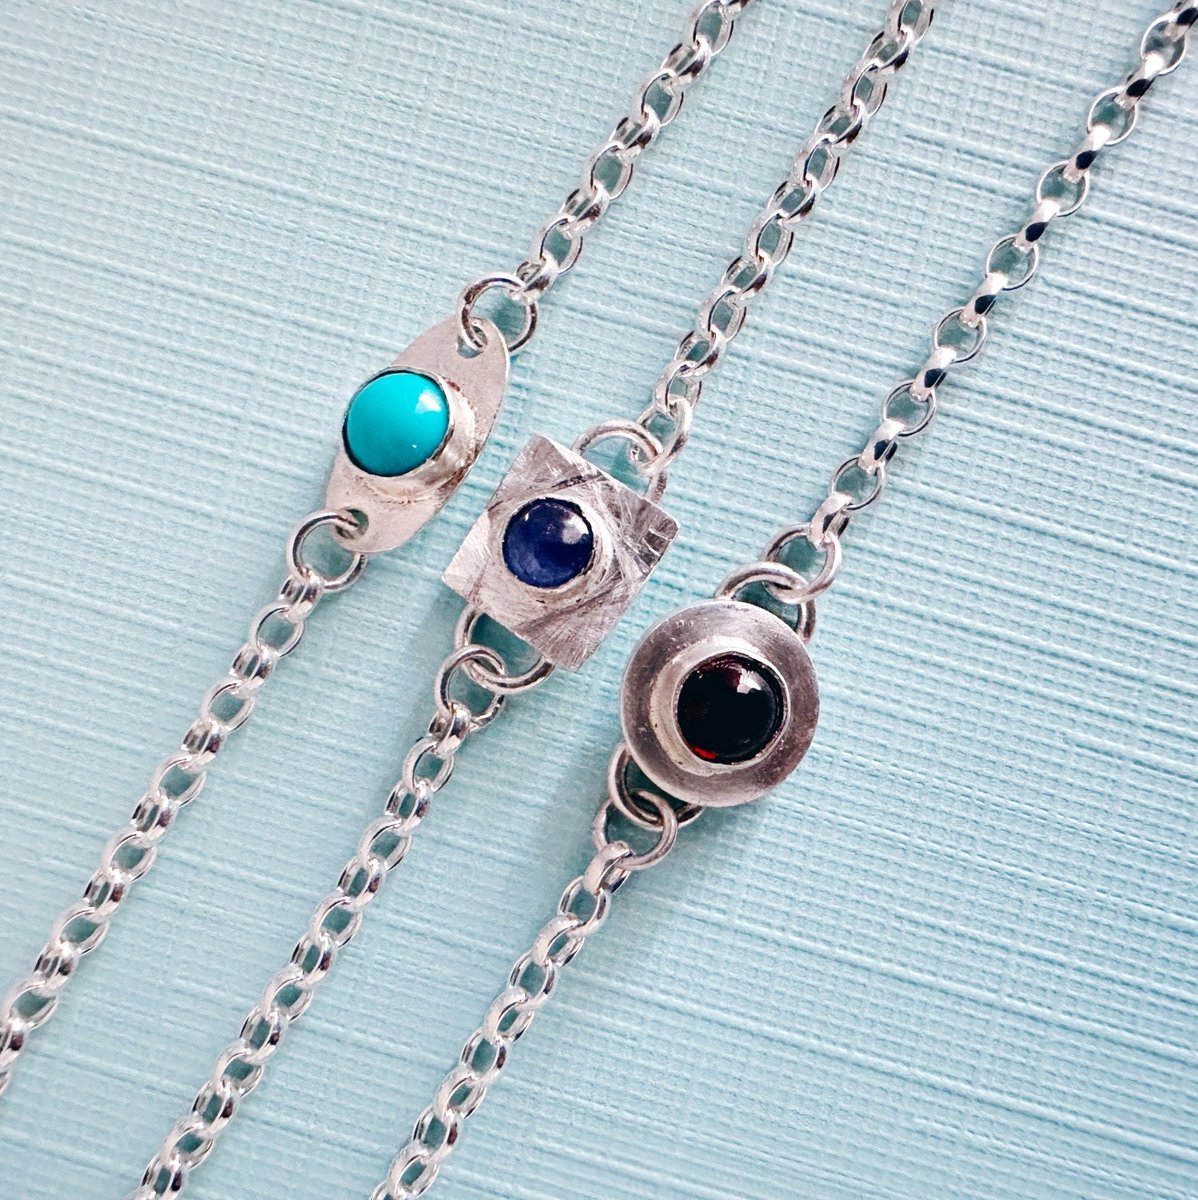 Turquoise Silver Friendship Bracelet tuppu.net/7e9fcfb #bizbubble #HandmadeHour ##UKGiftHour #inbizhour #shopsmall #giftideas #UKHashtags #MHHSBD #FriendshipBracelets